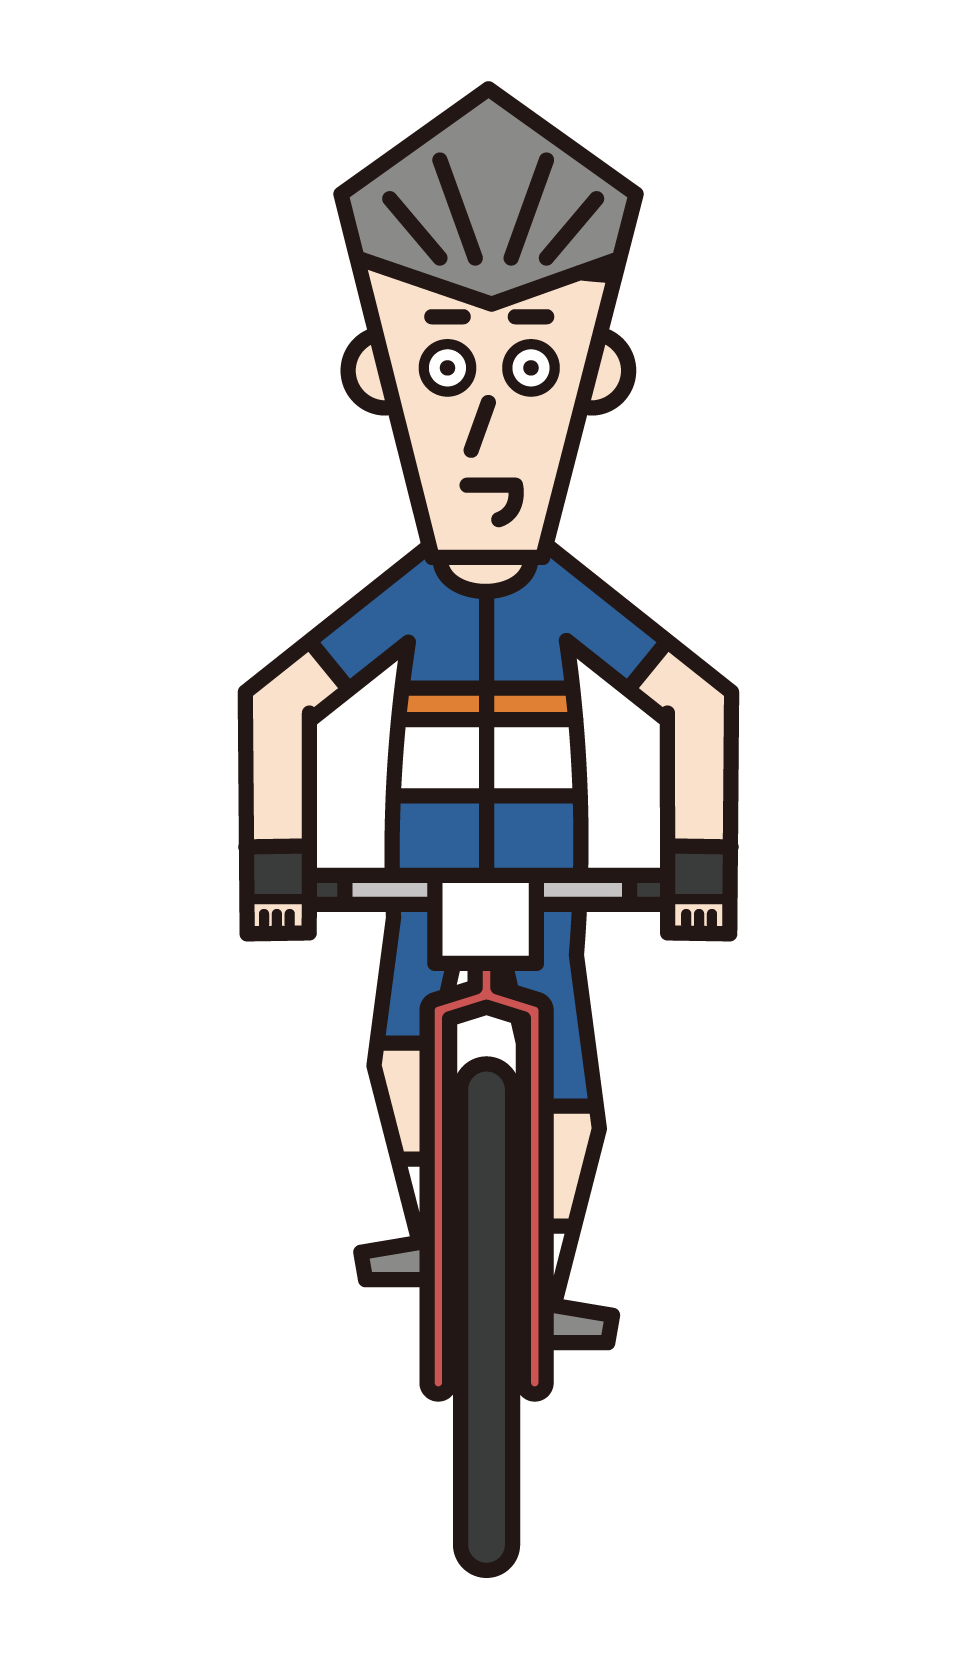 Illustration of a man on a mountain bike